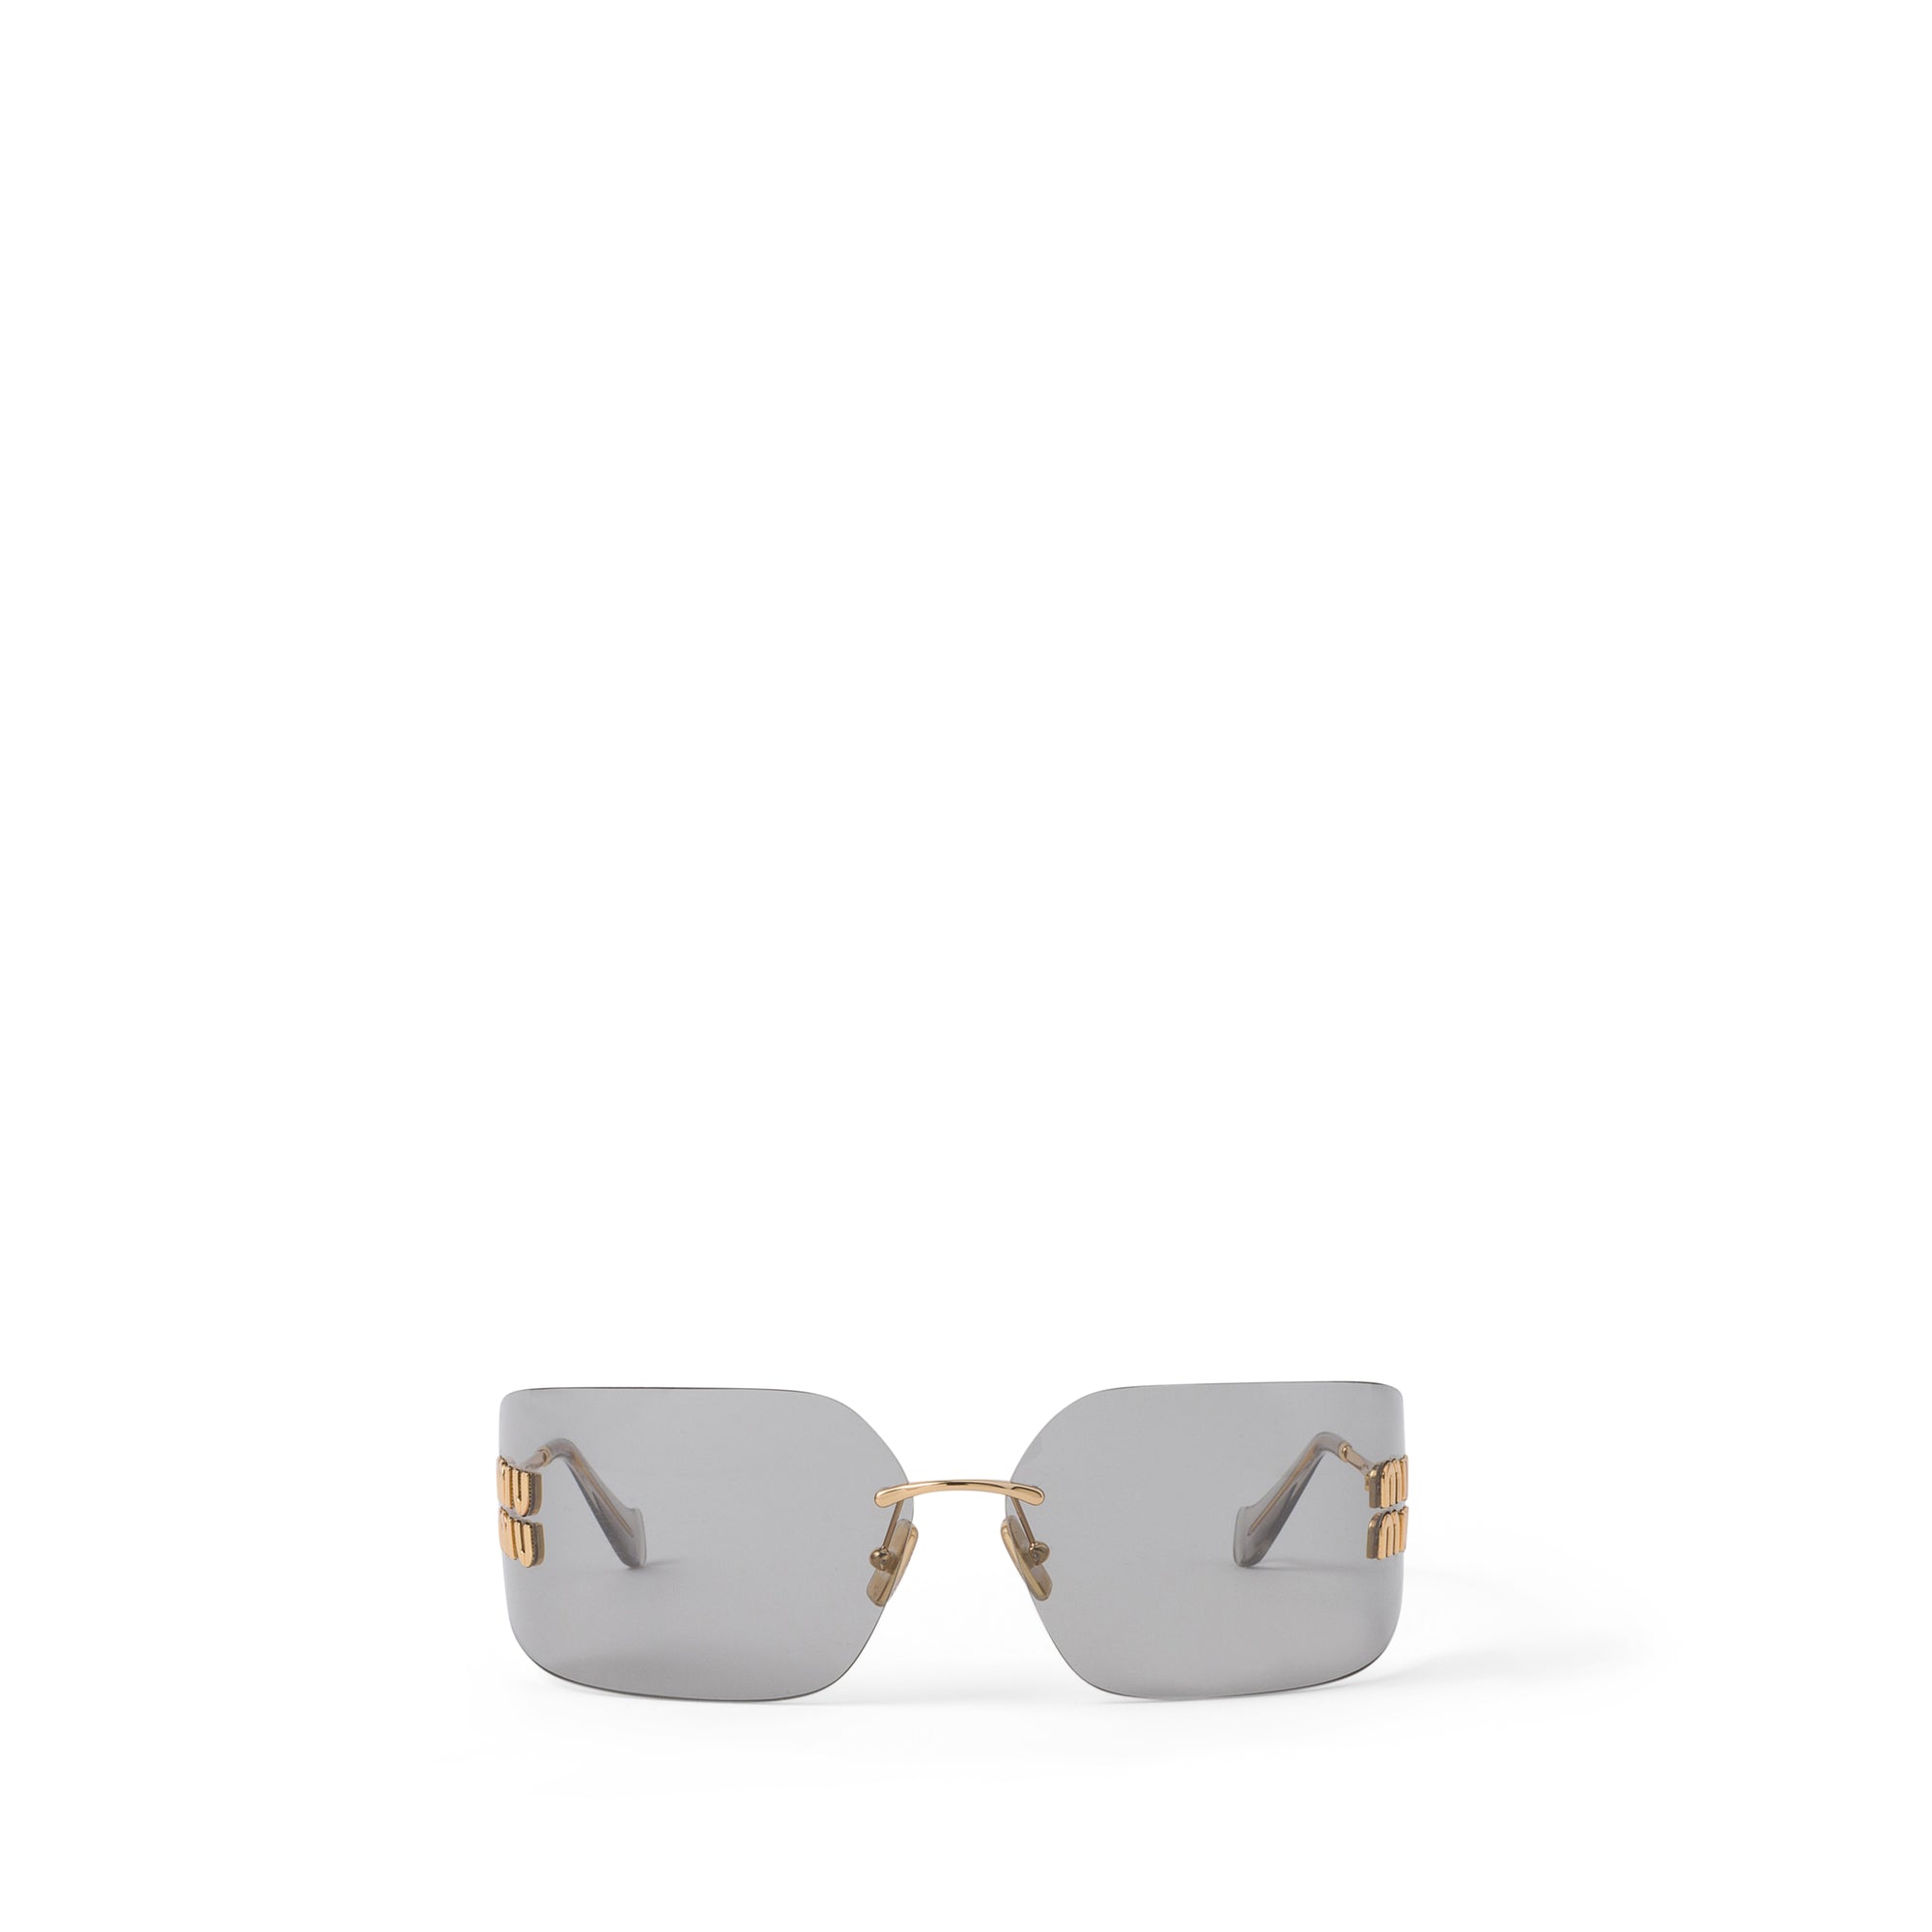 Miu Miu - Women’s Runway Sunglasses - (Light Grey) view 1